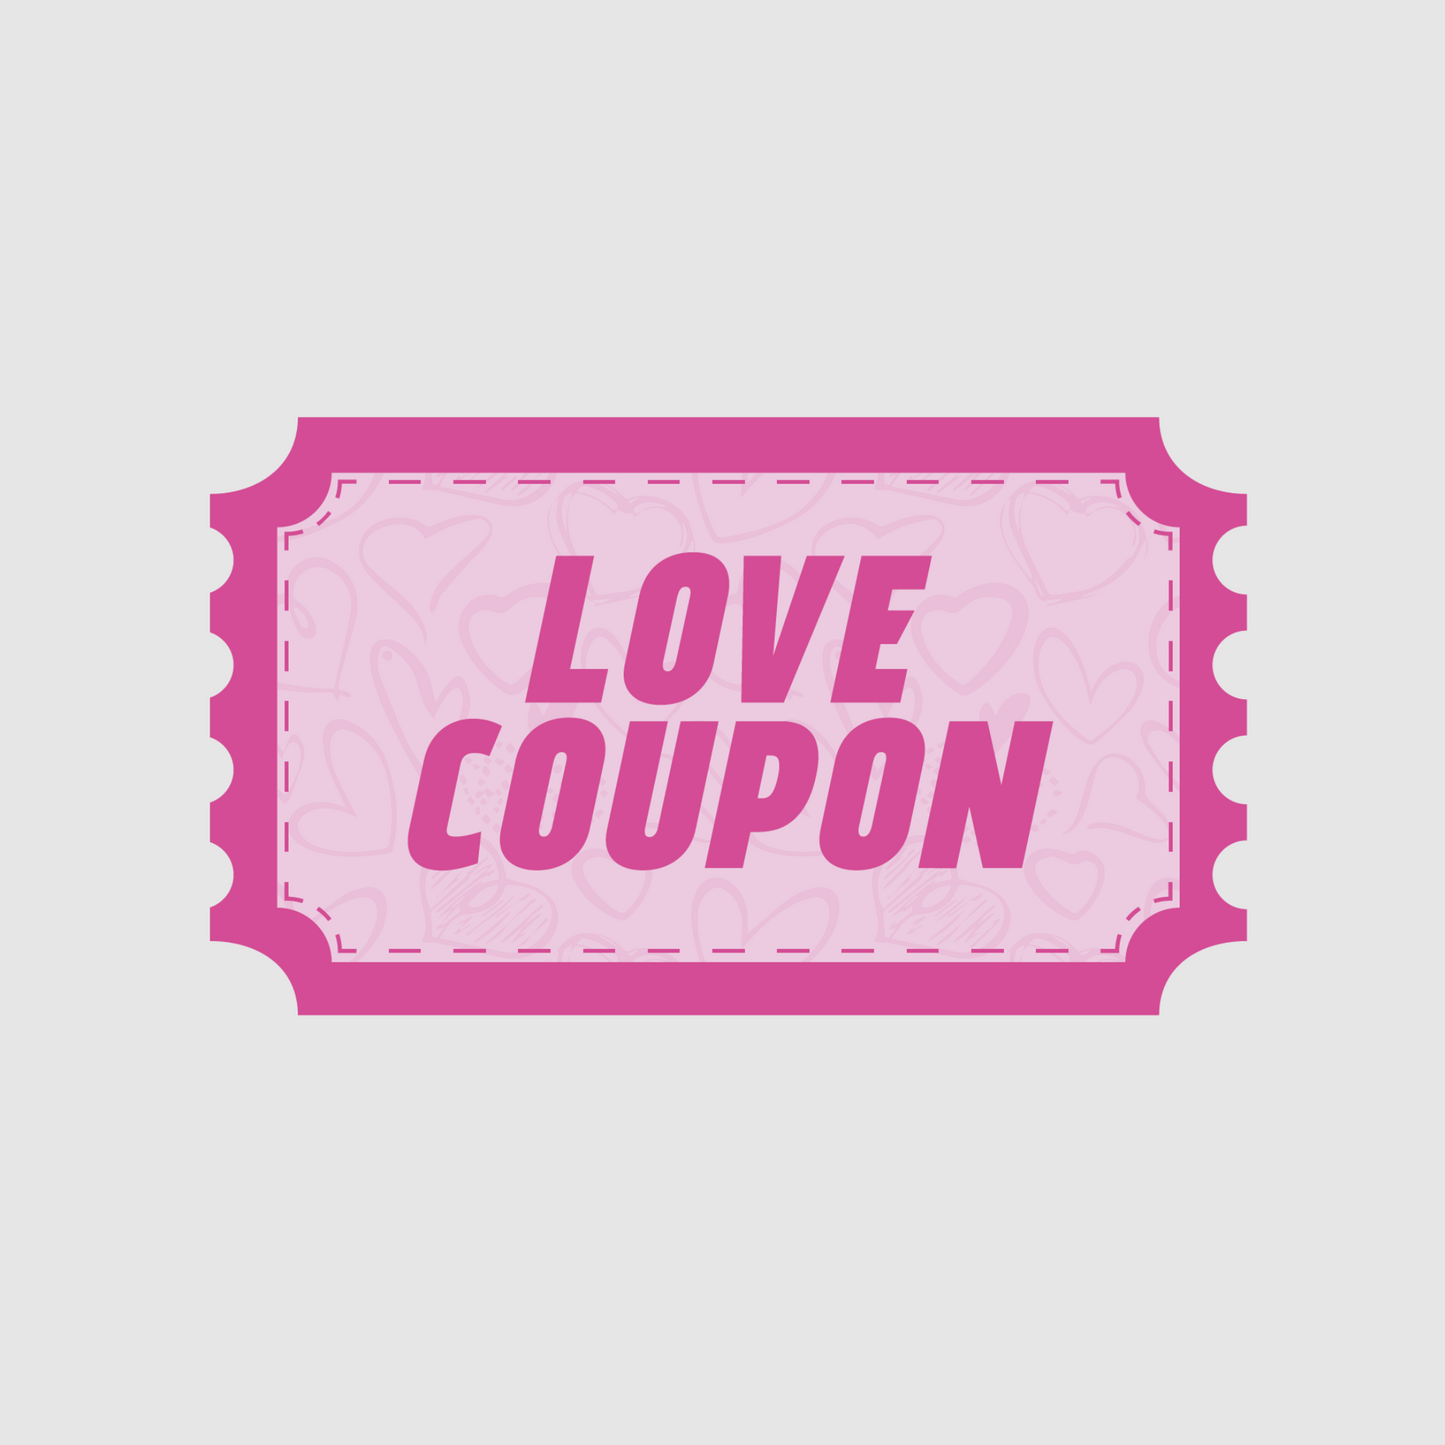 love coupon phrase sticker